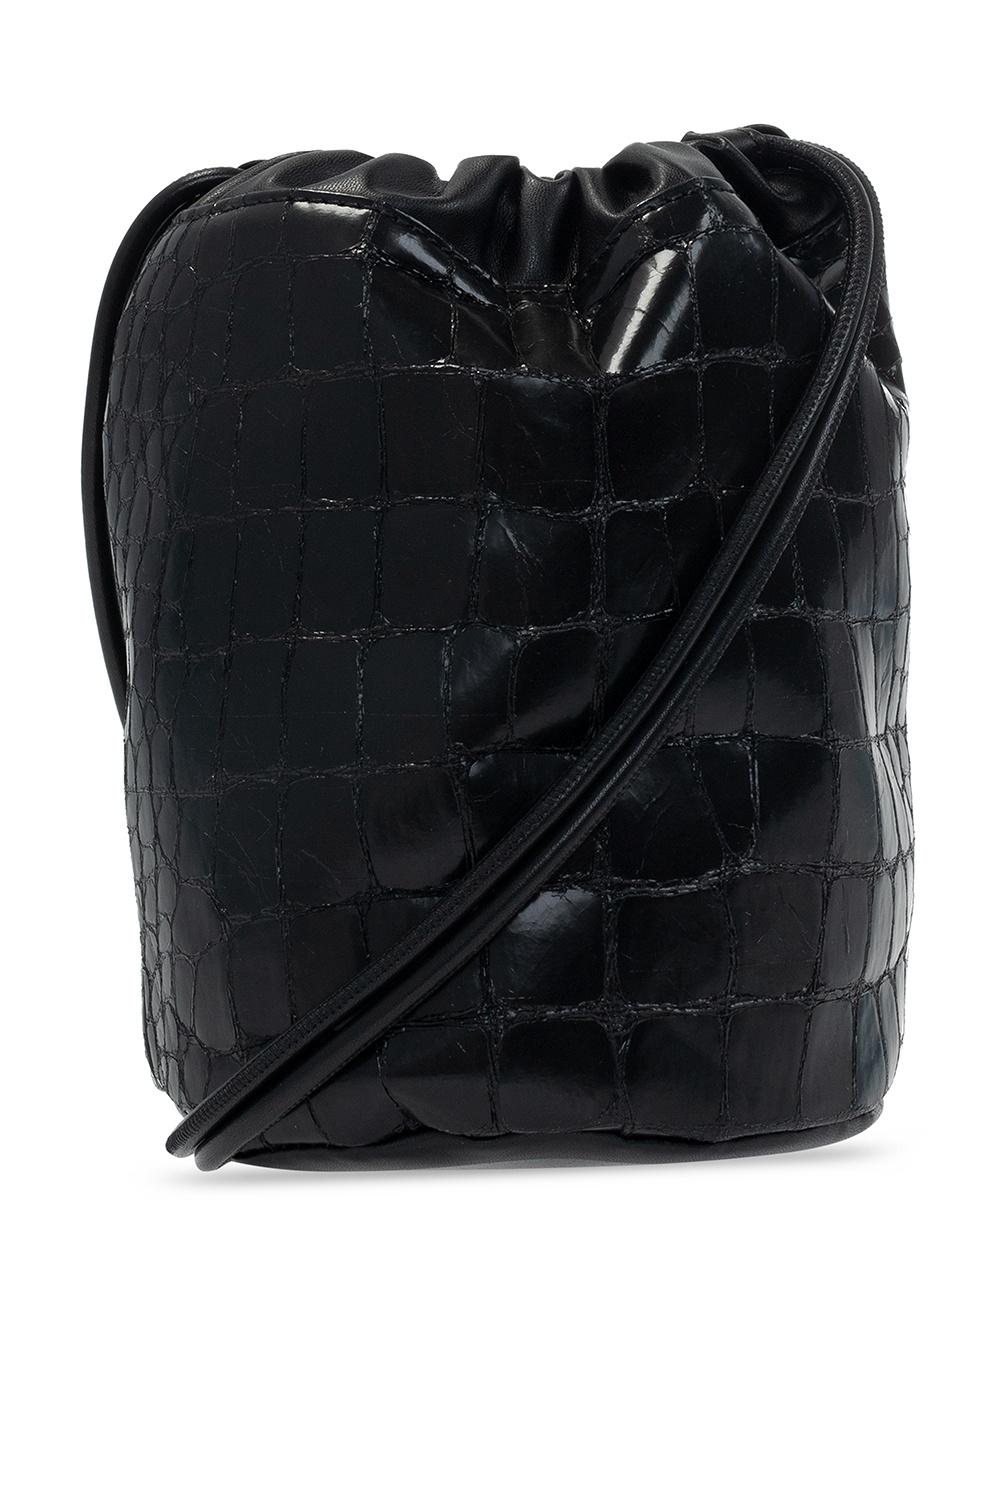 MM6 by Maison Martin Margiela Bucket Bag in Black - Lyst